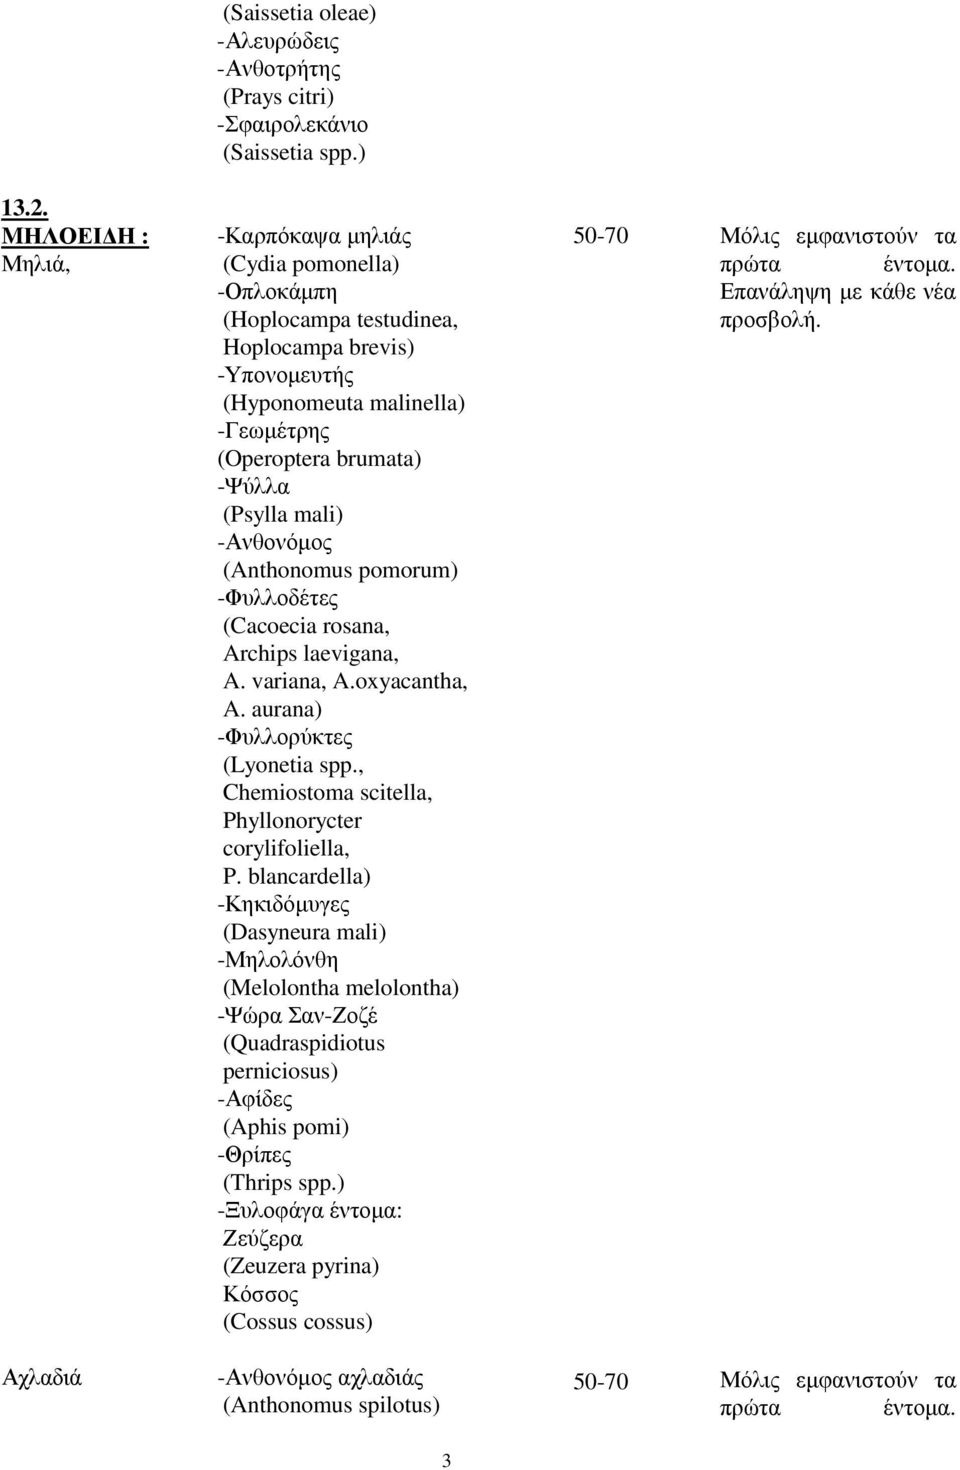 (Psylla mali) -Ανθονόµος (Anthonomus pomorum) -Φυλλοδέτες (Cacoecia rosana, Archips laevigana, A. variana, A.oxyacantha, A. aurana) -Φυλλορύκτες (Lyonetia spp.